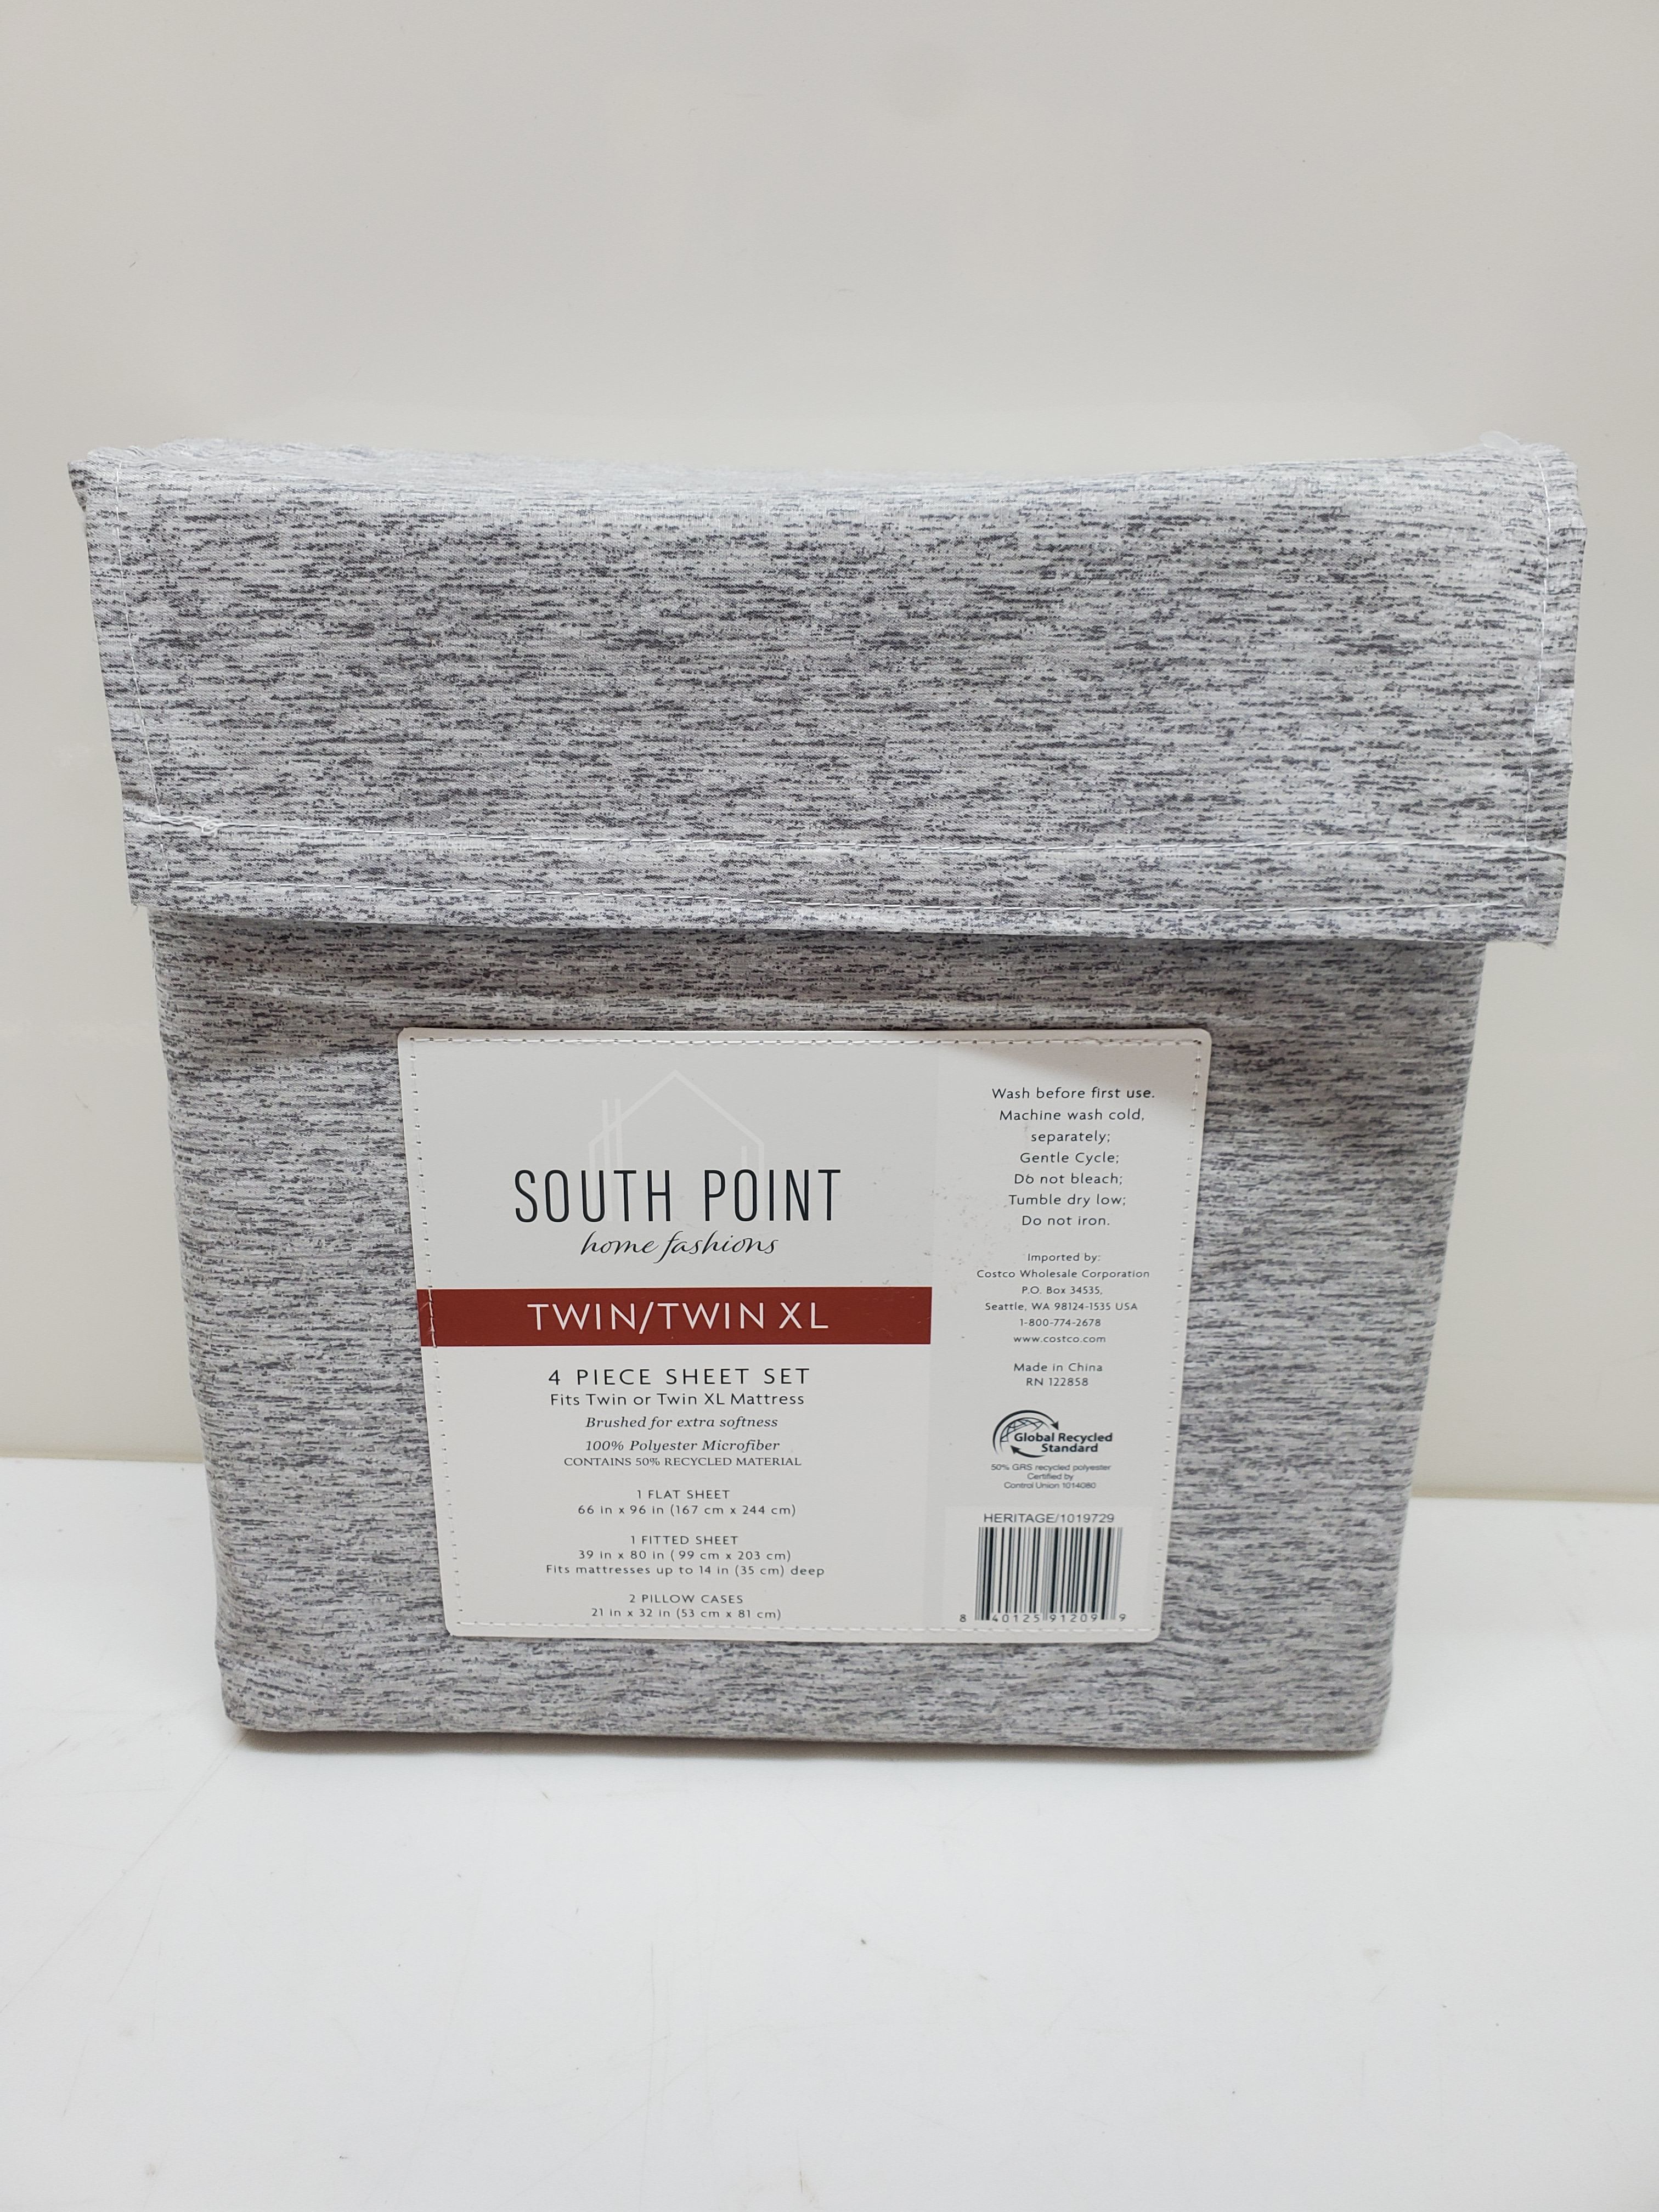 South Point Home Fashions Microfiber 6-Piece Sheet Set